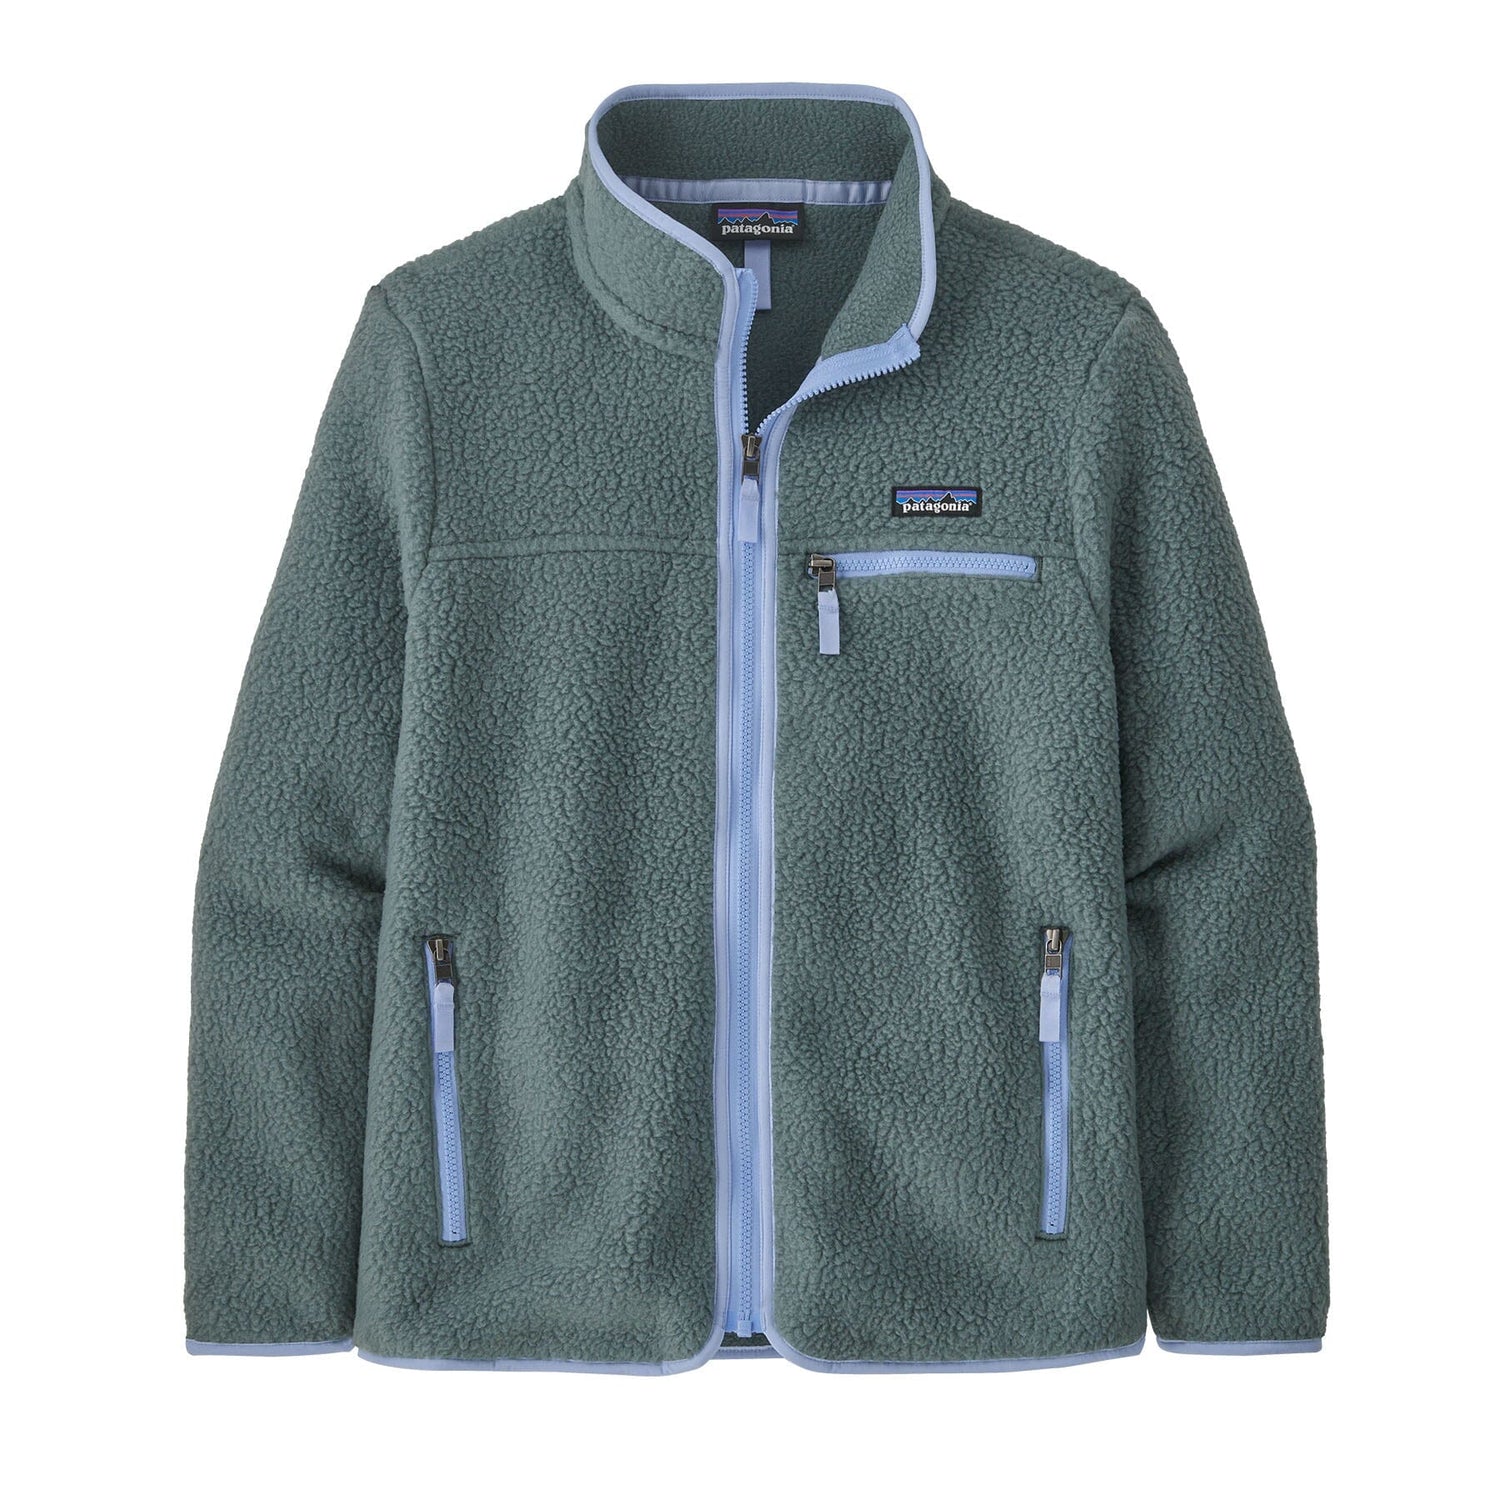 Patagonia W's Retro Pile Fleece Jacket - Recycled Polyester Nouveau Green Jacket